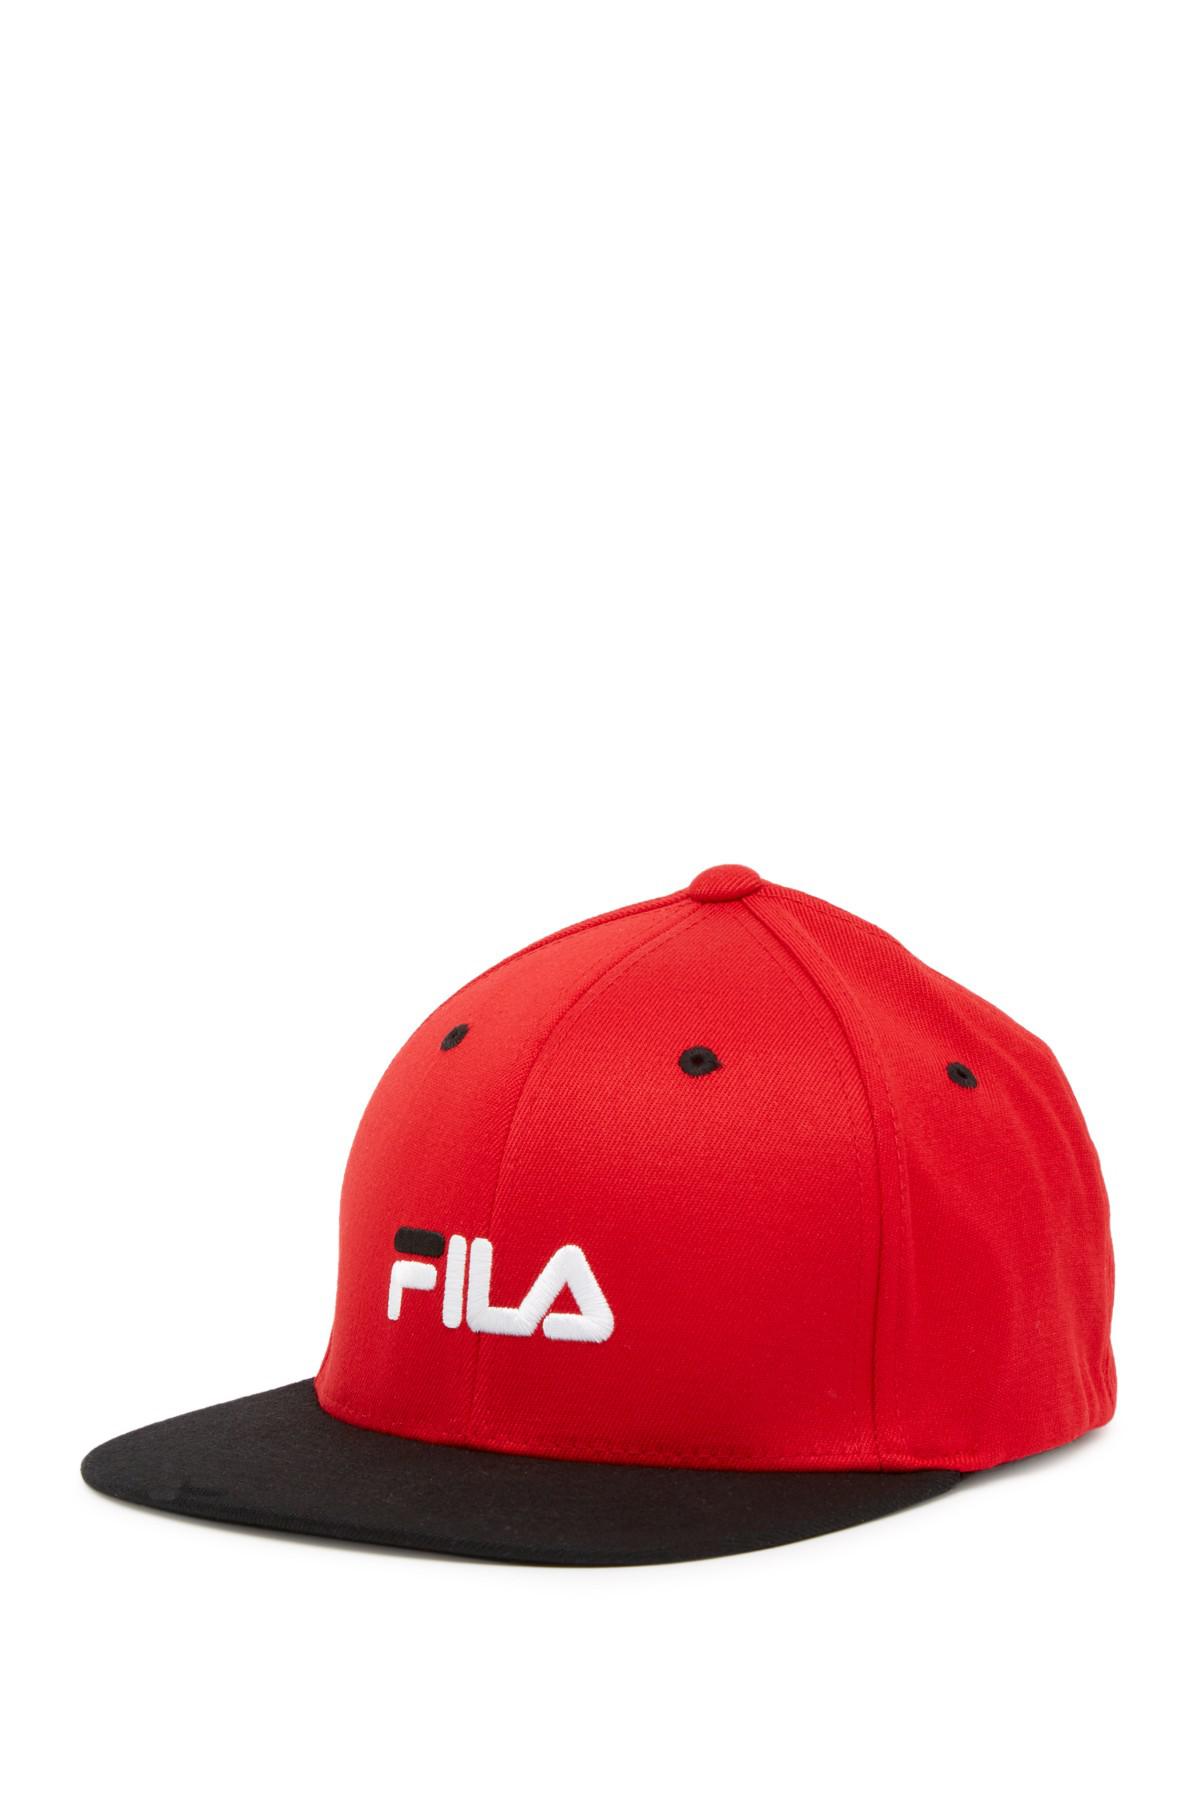 Fila Cotton Heritage Flat Brim Flexfit Cap in Red for Men - Lyst